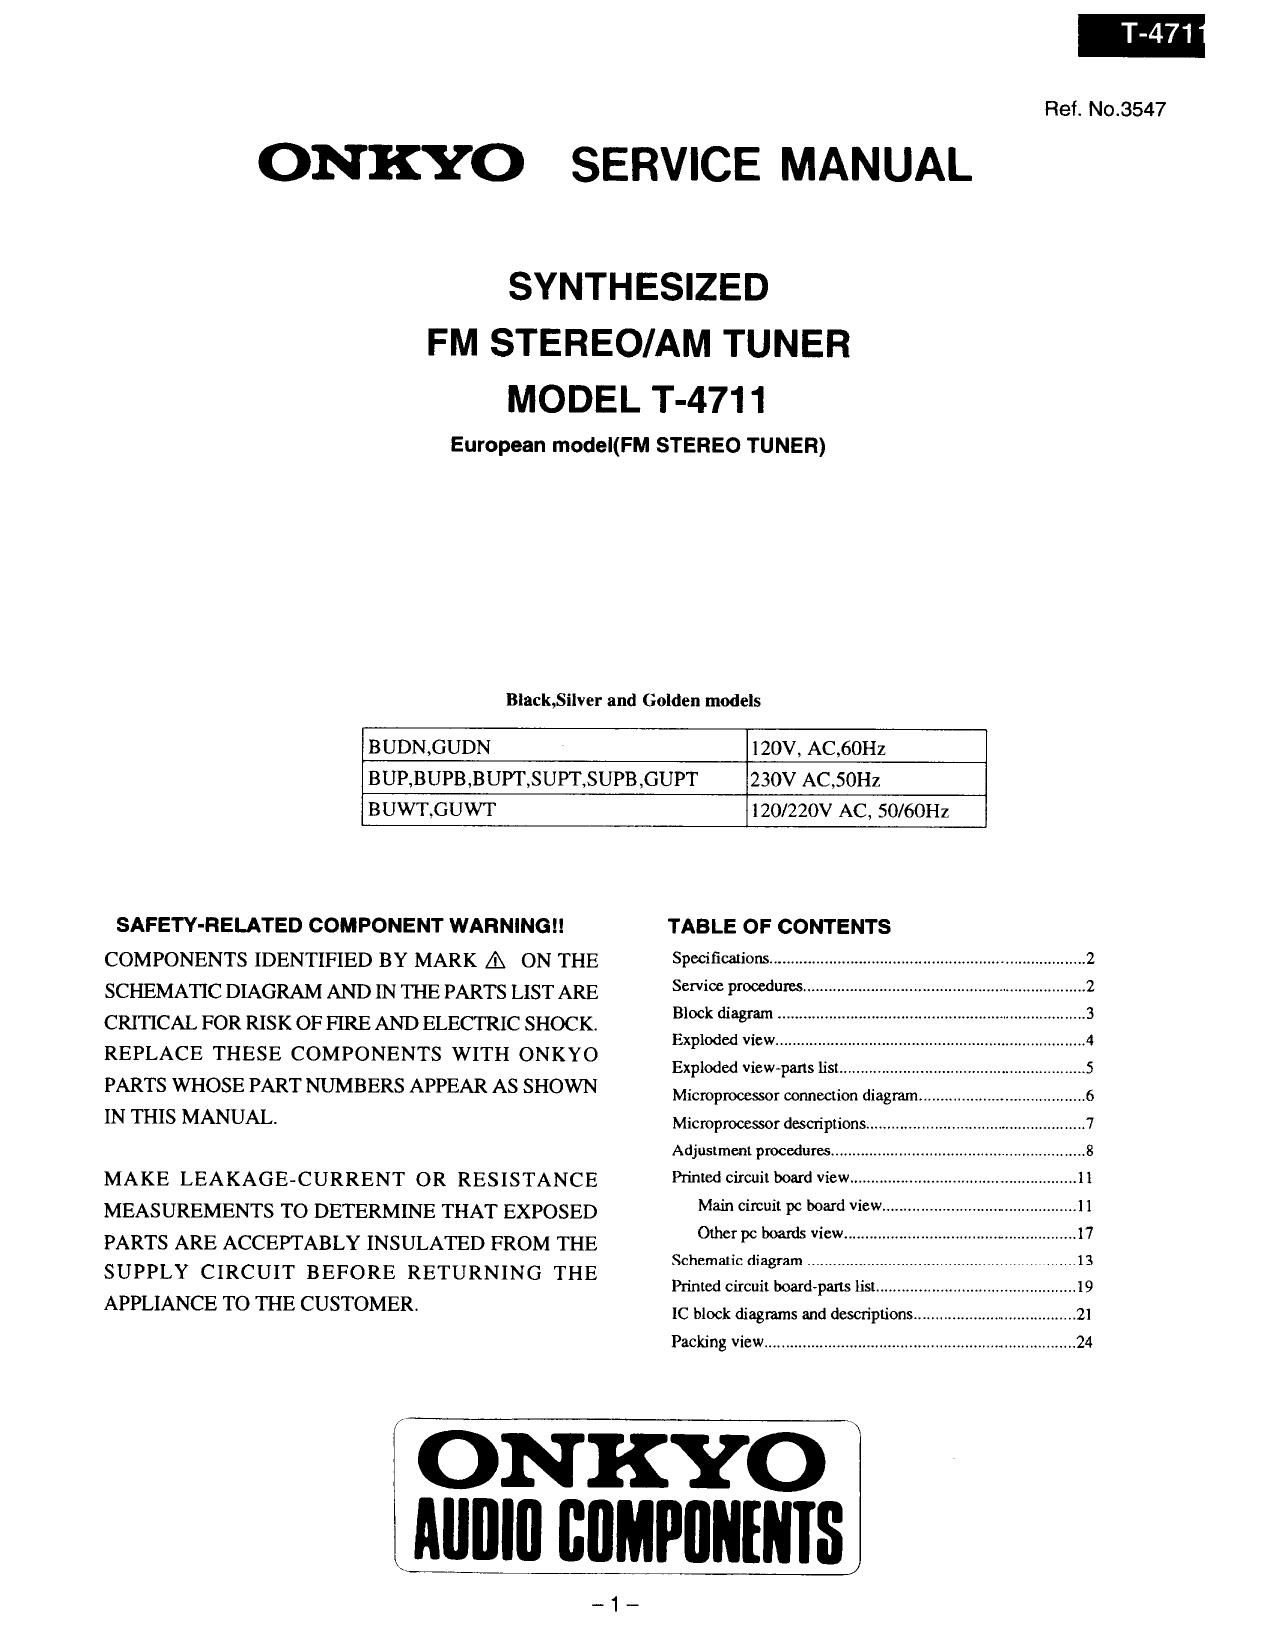 Onkyo T 4711 Service Manual